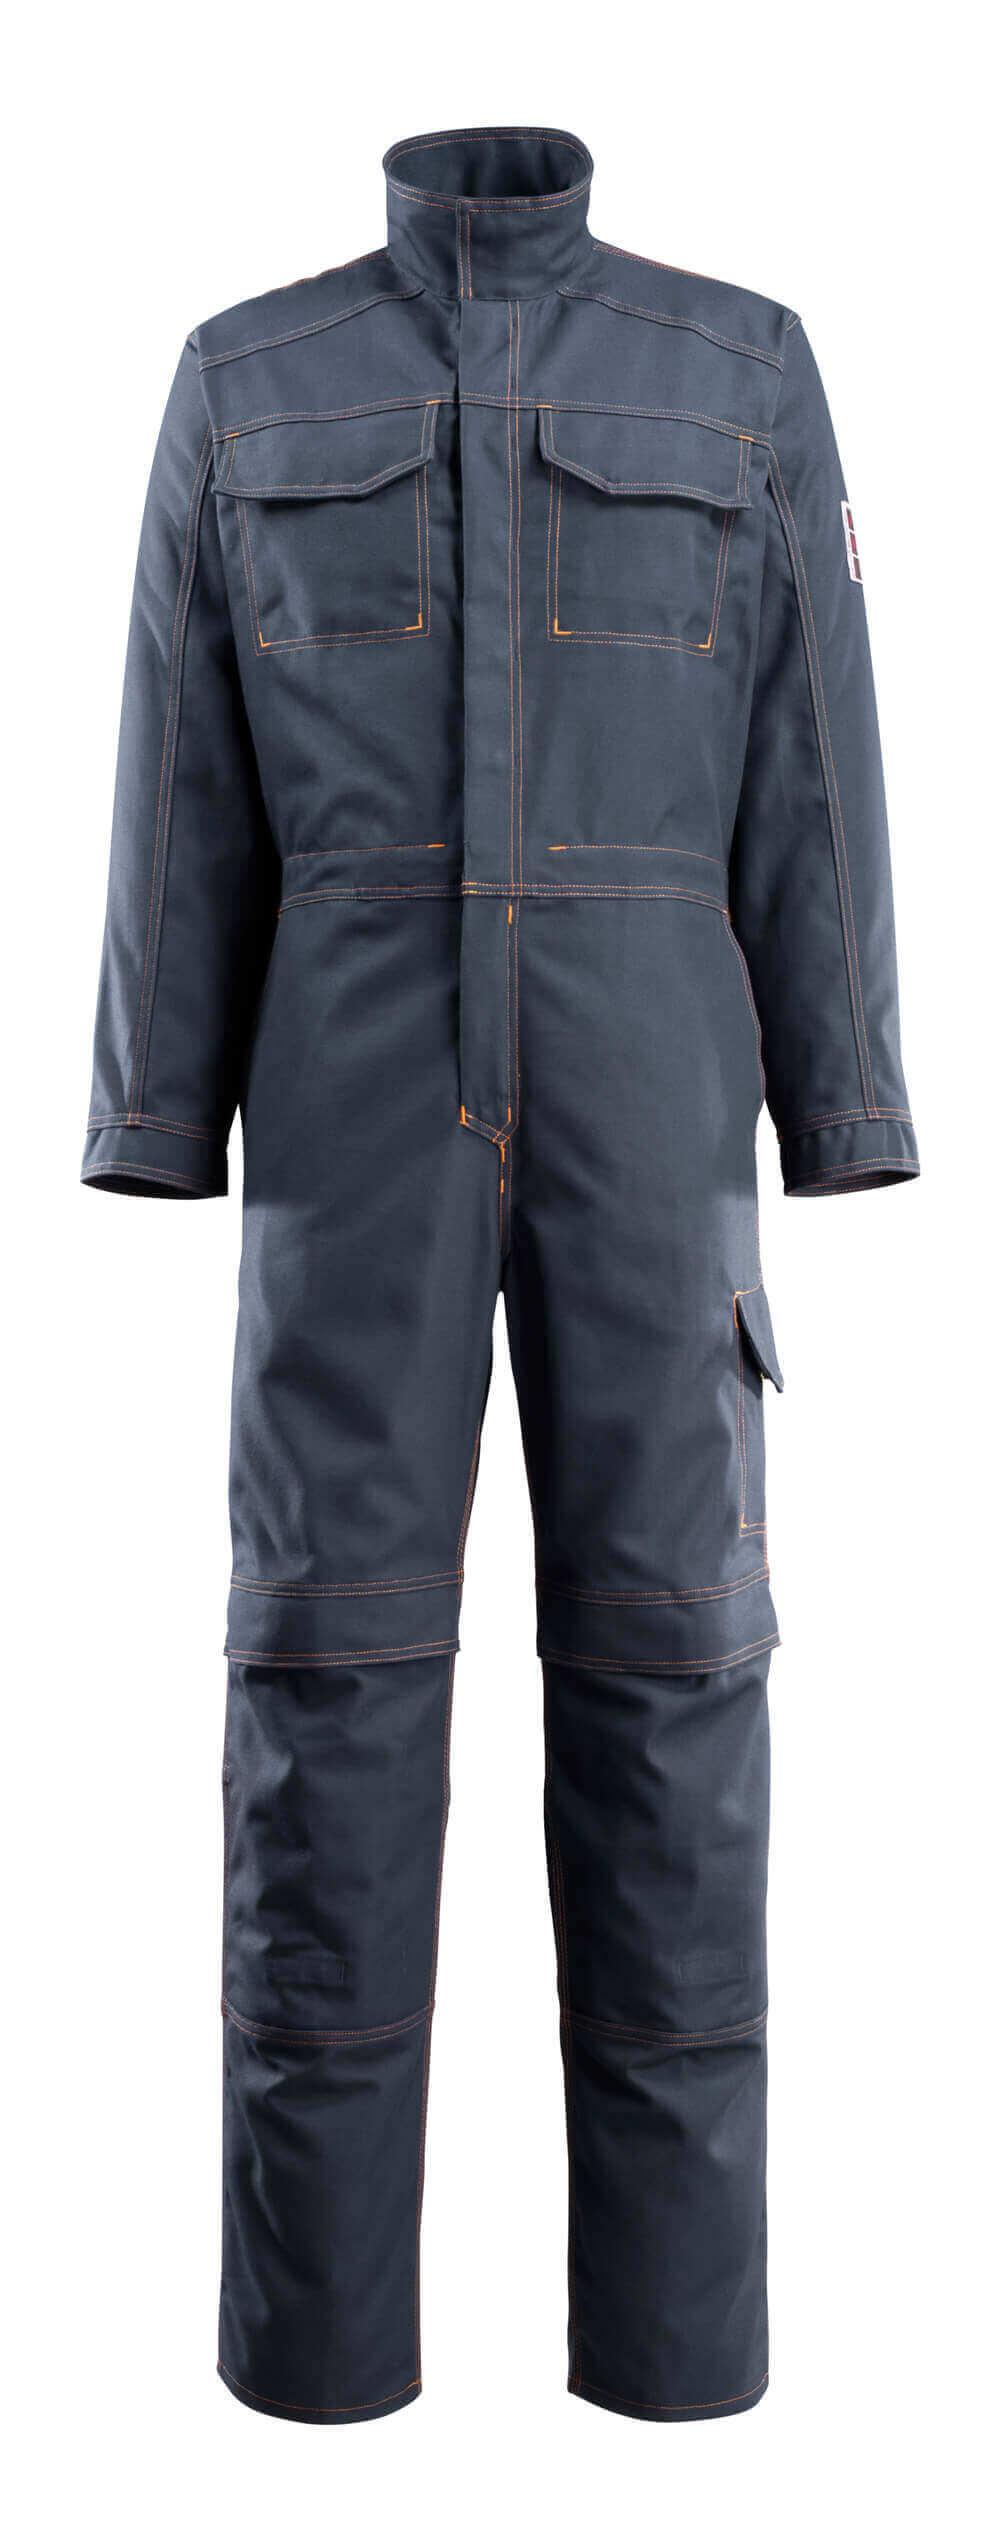 MASCOT®MULTISAFE Boilersuit with kneepad pockets Baar 6619 - DaltonSafety